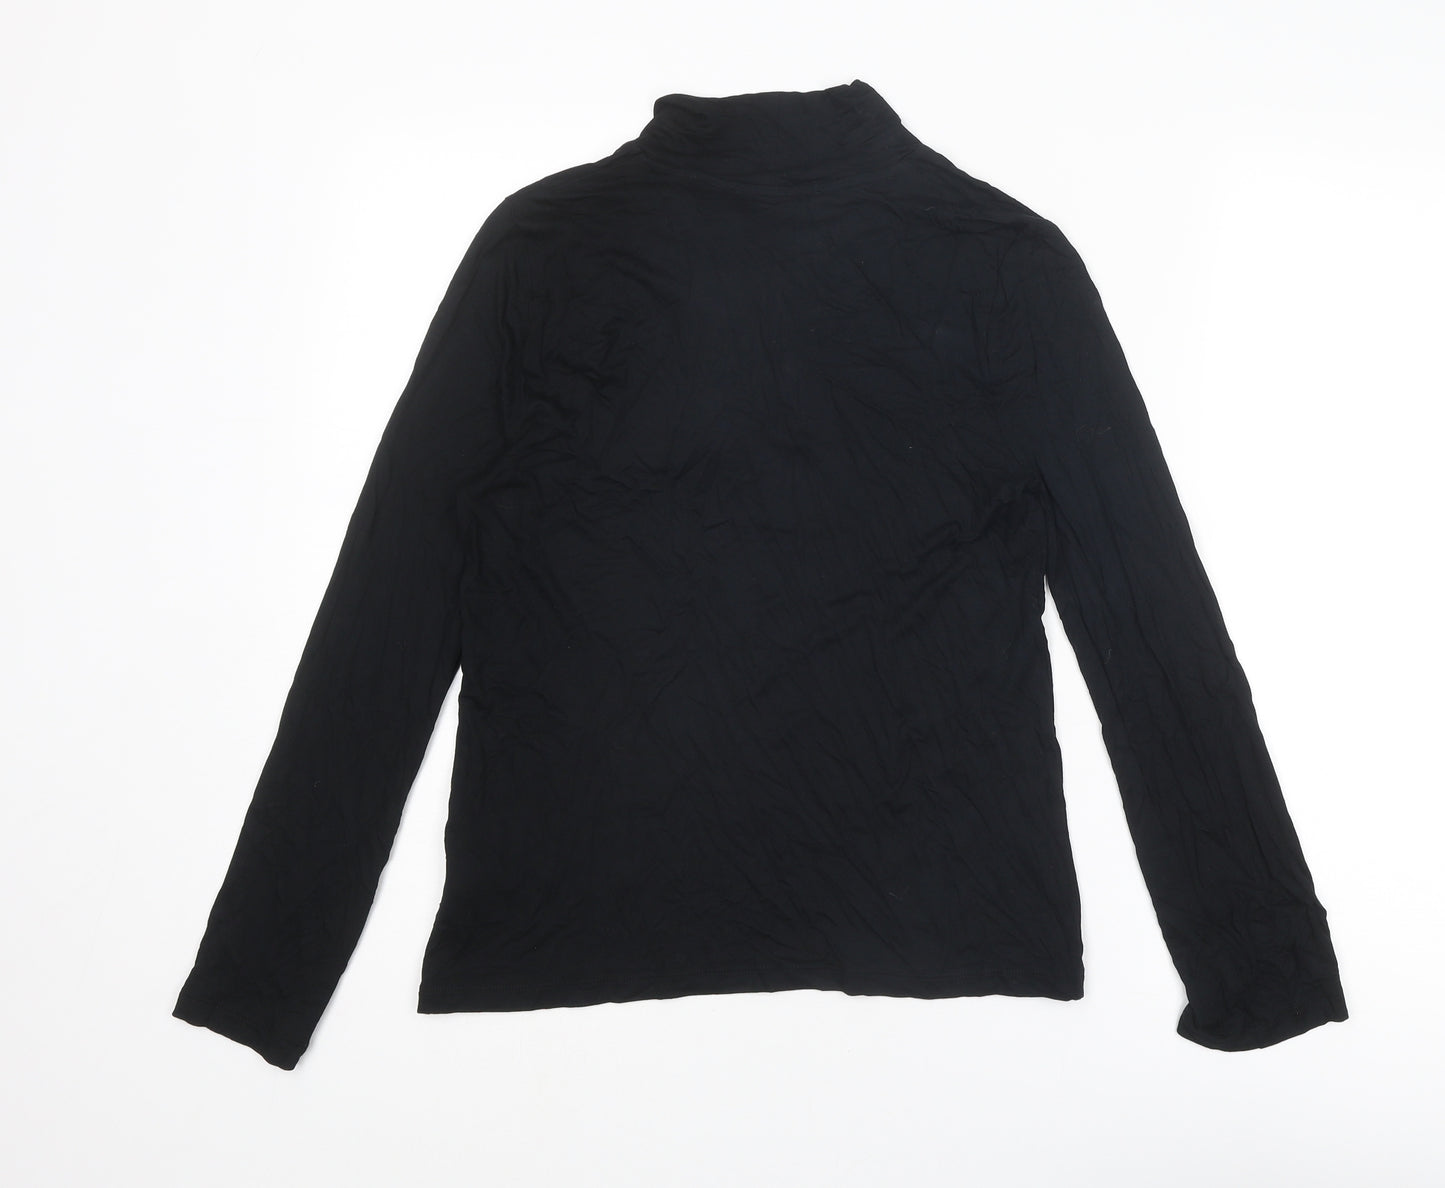 Marks and Spencer Womens Black Viscose Basic T-Shirt Size 8 V-Neck